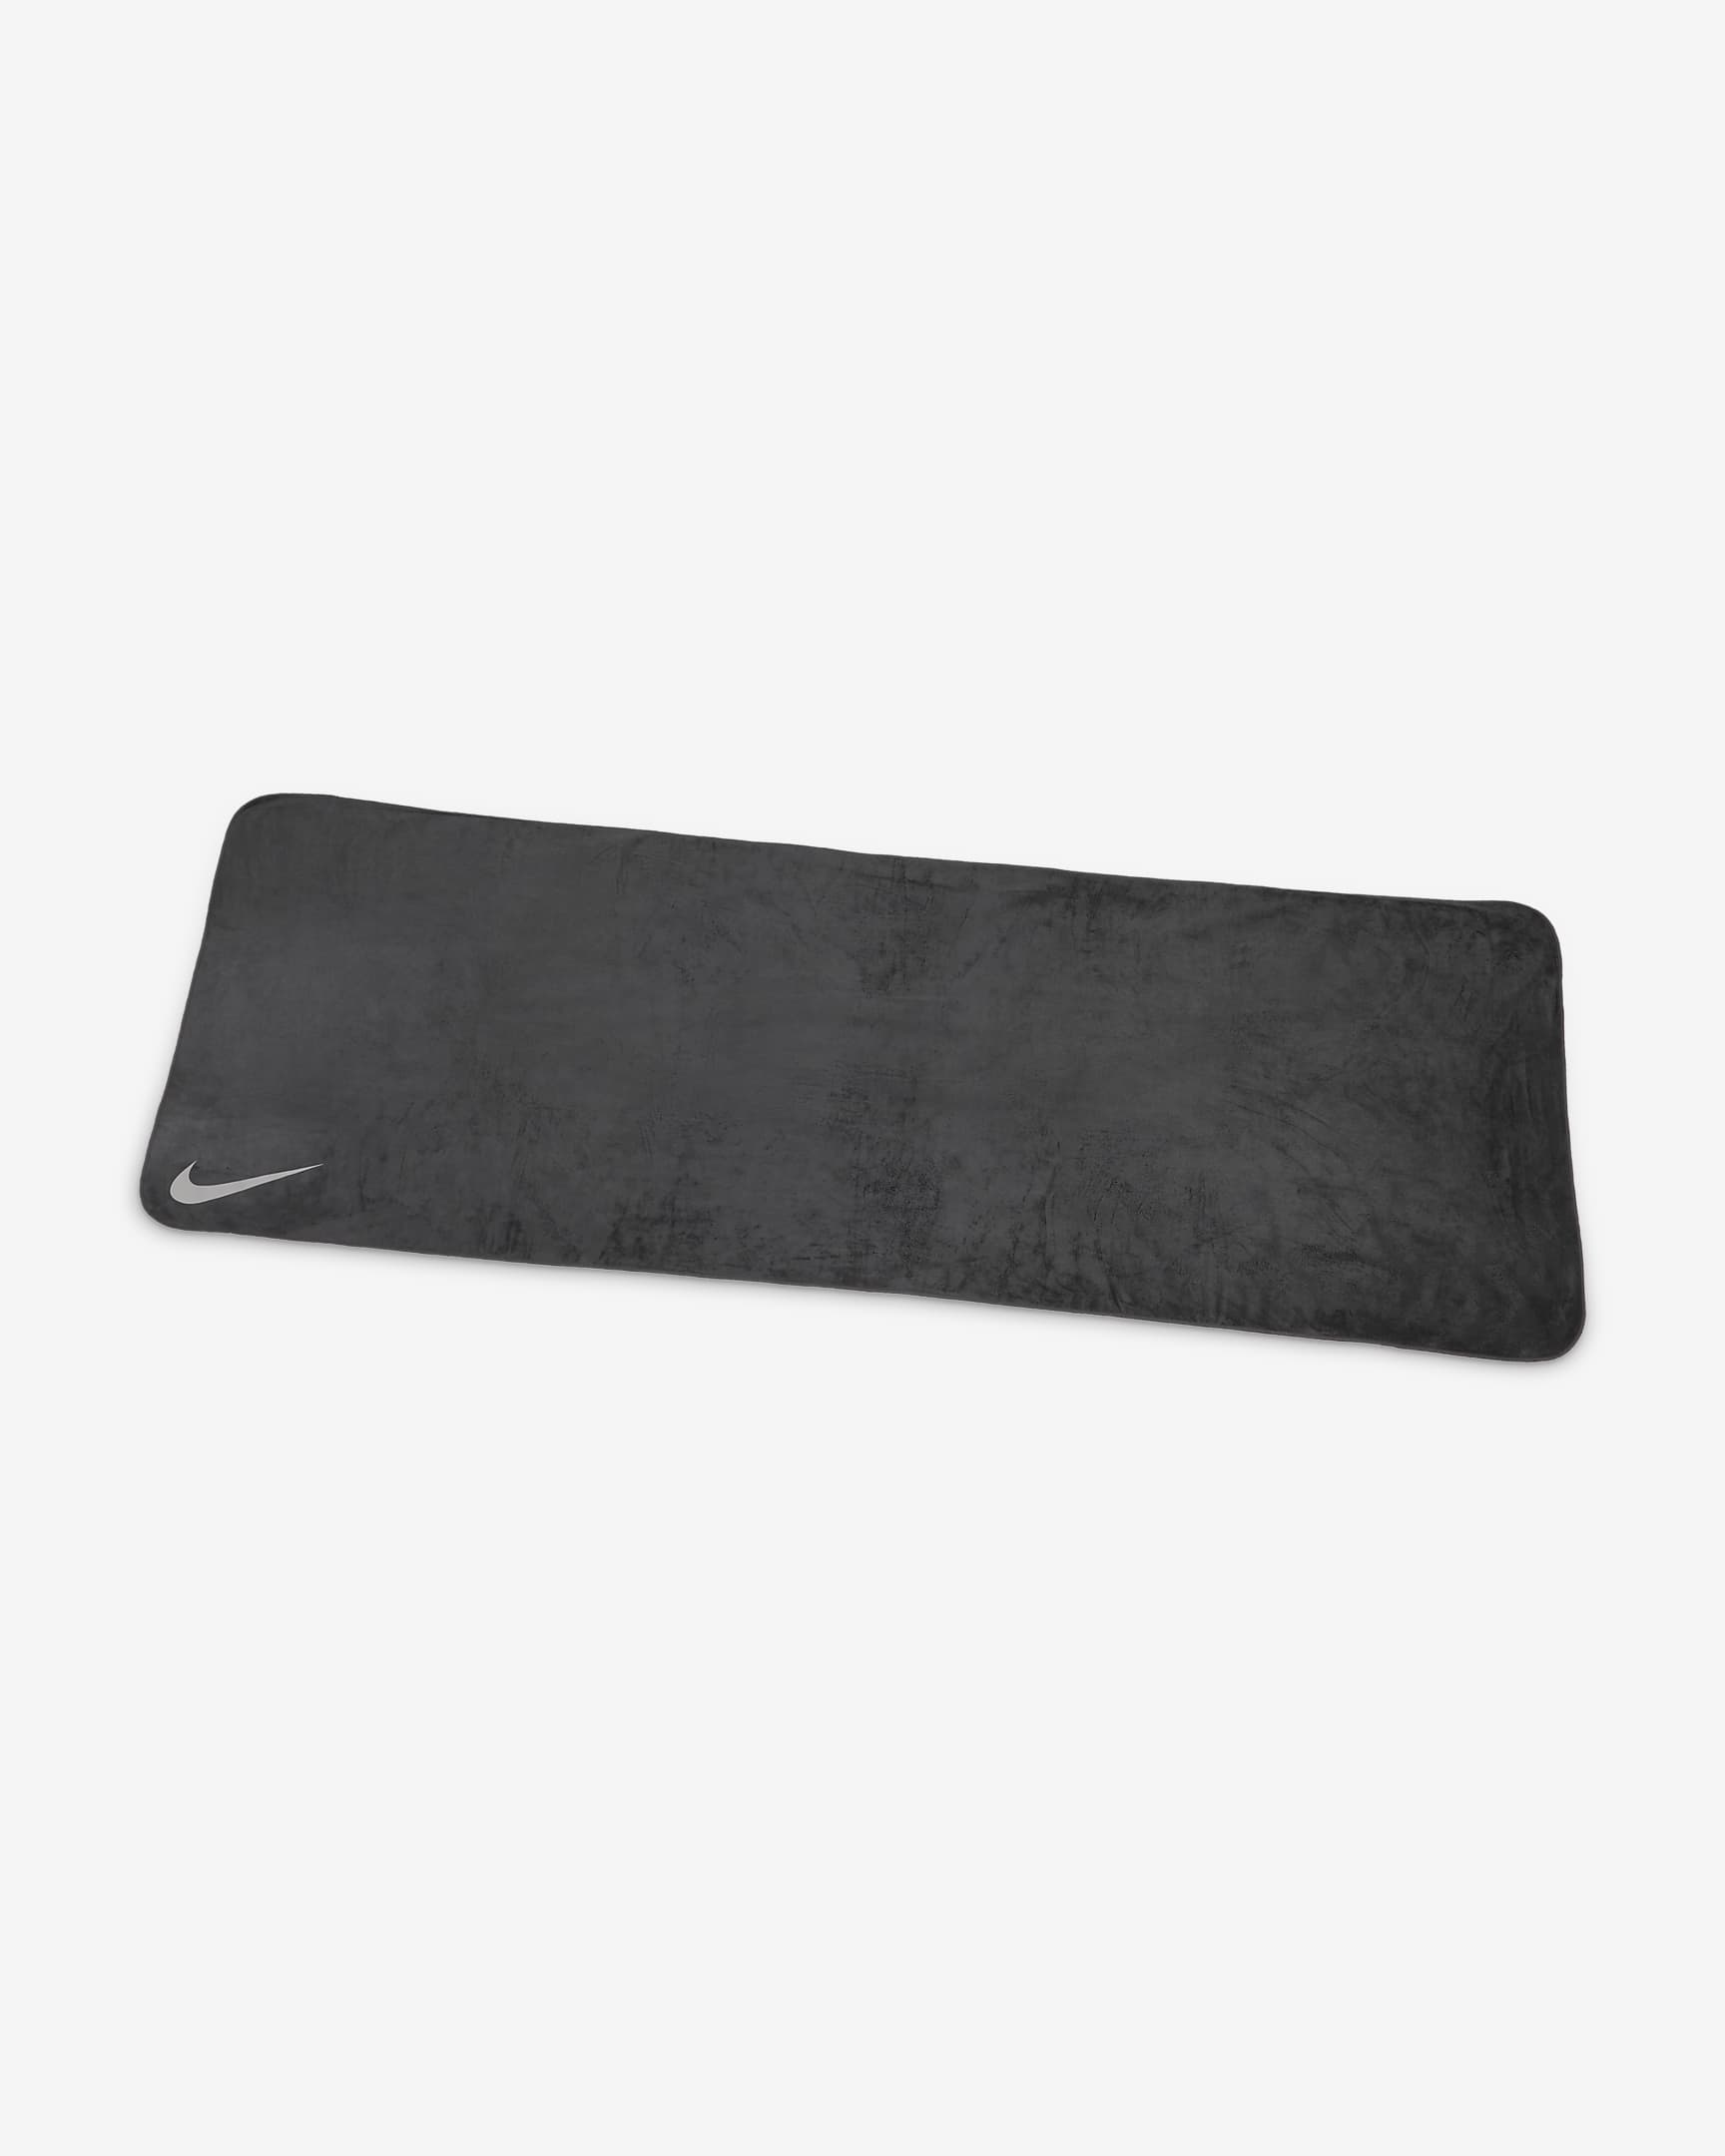 Nike Yoga Handtuch - Anthracite/Medium Grey